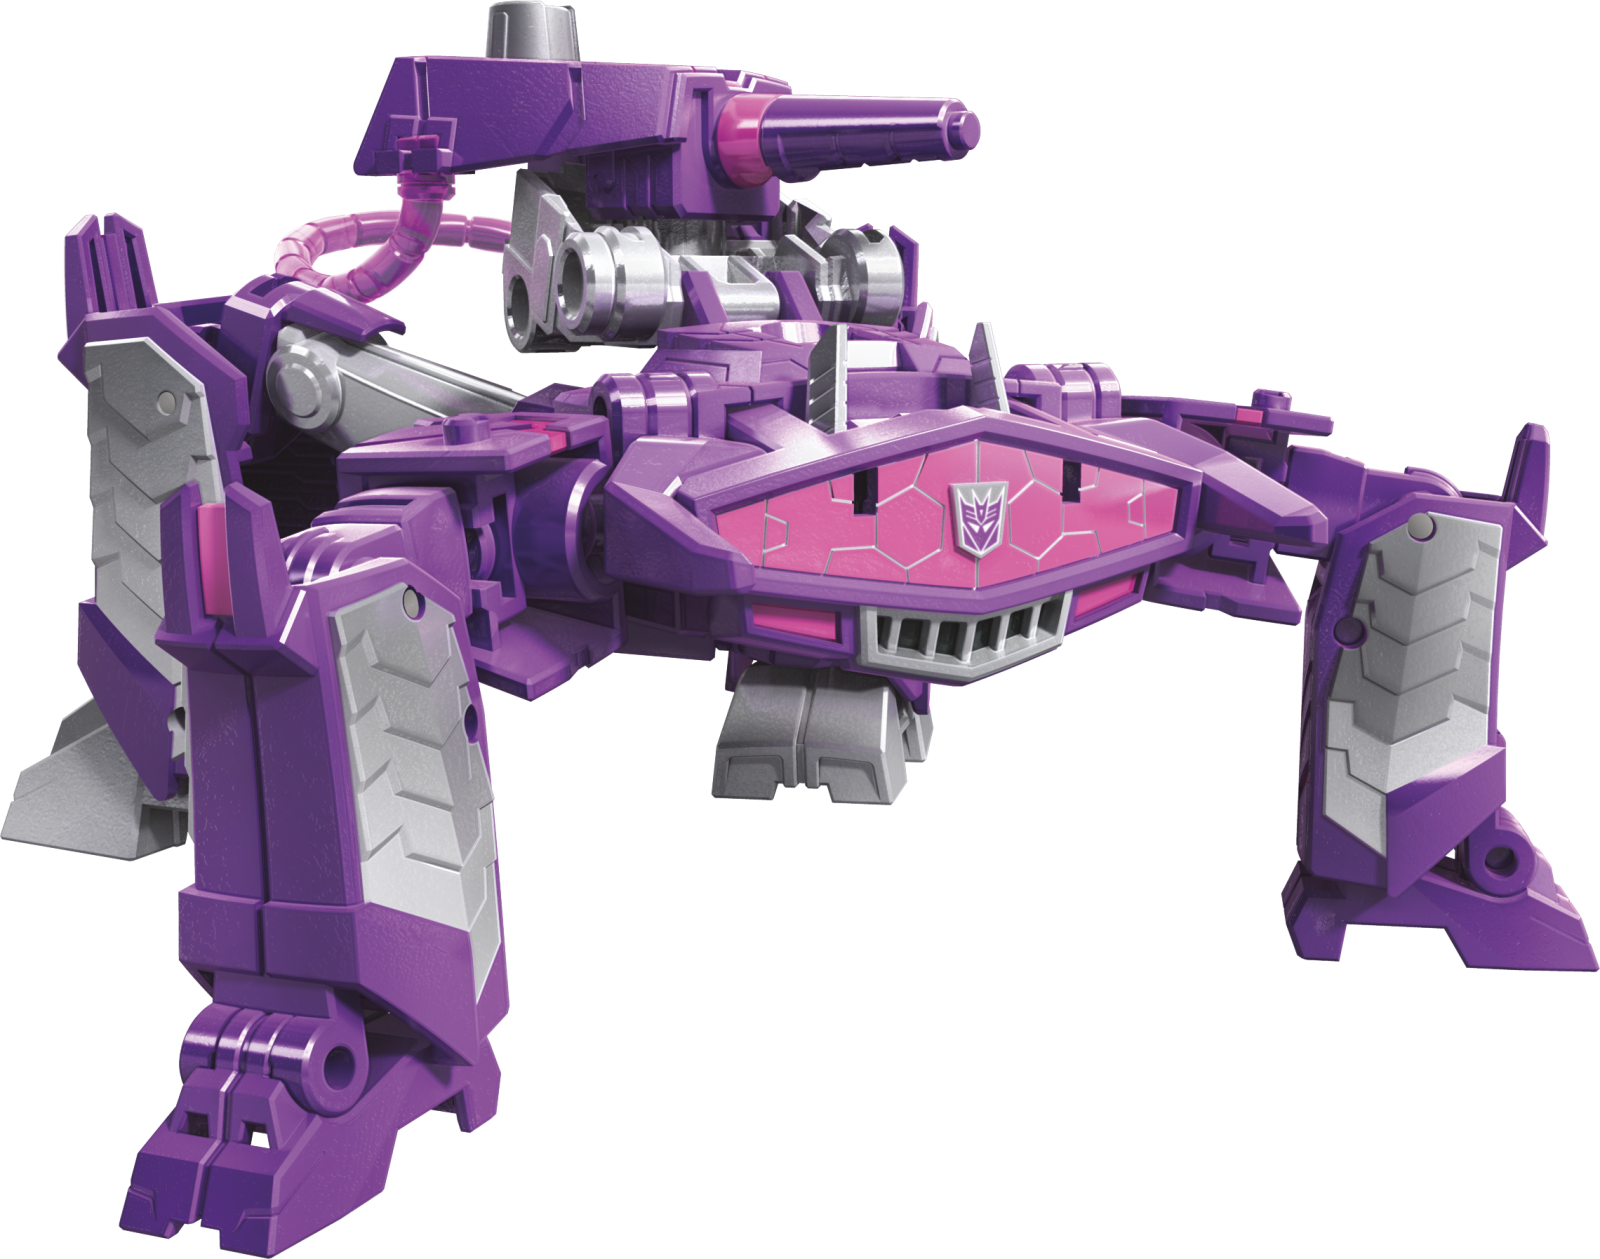 Transform each. Transformers Cyberverse Shockwave. Transformers Cyberverse Deluxe. Transformers Cyberverse Шоквейв. Transformers Cyberverse Deluxe class.